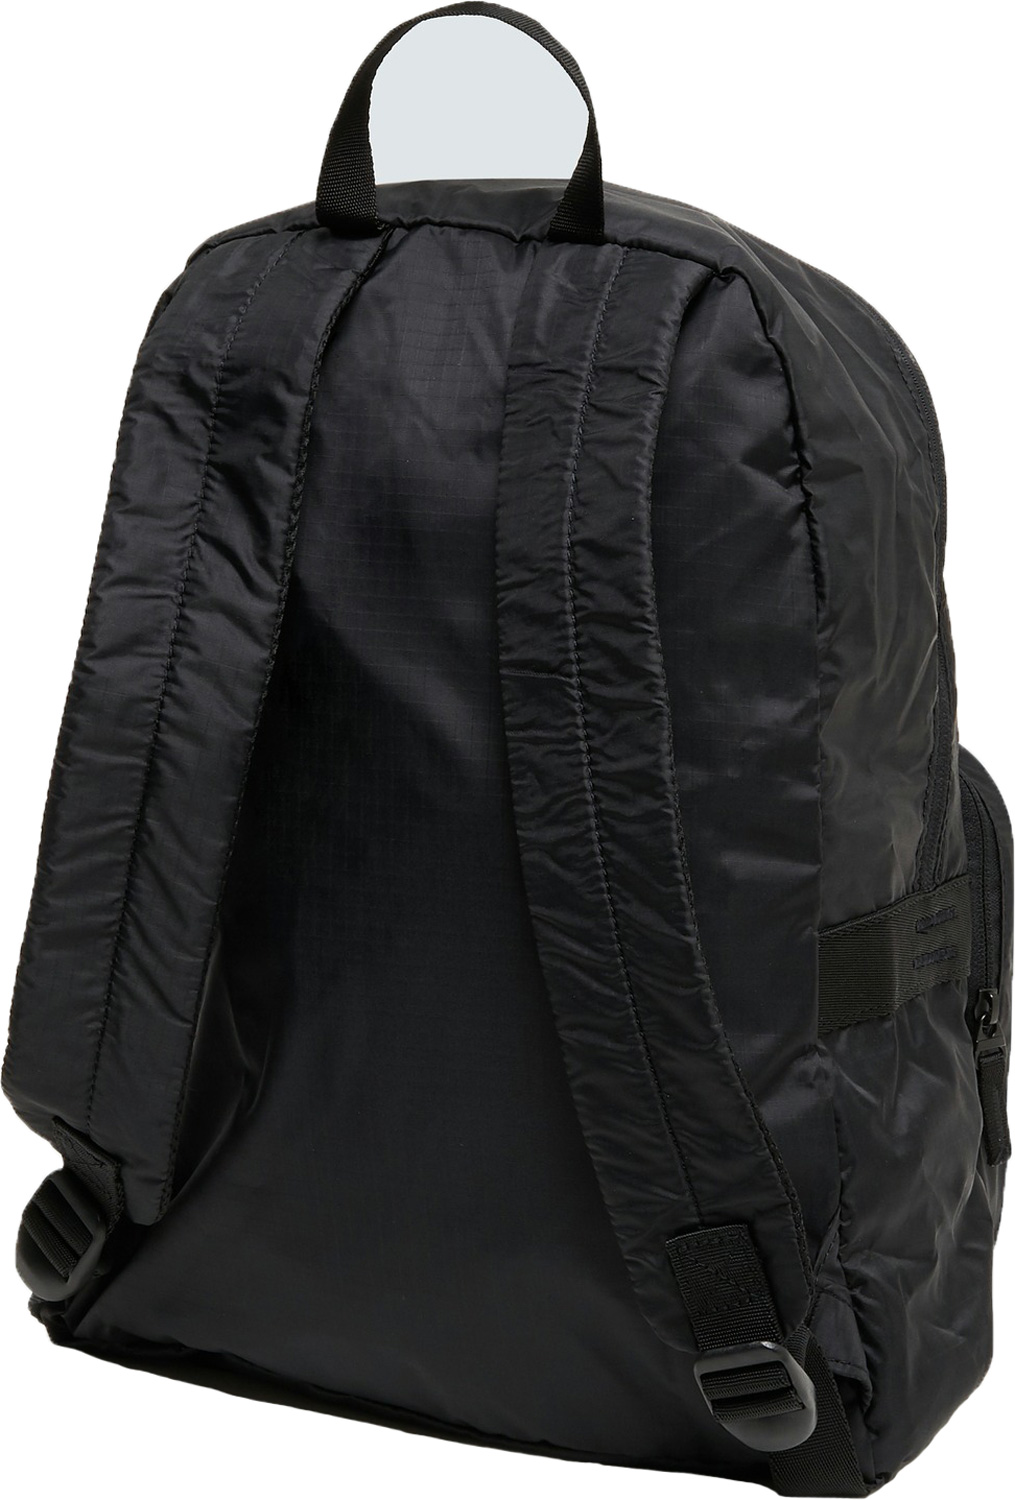 Versatile backpack